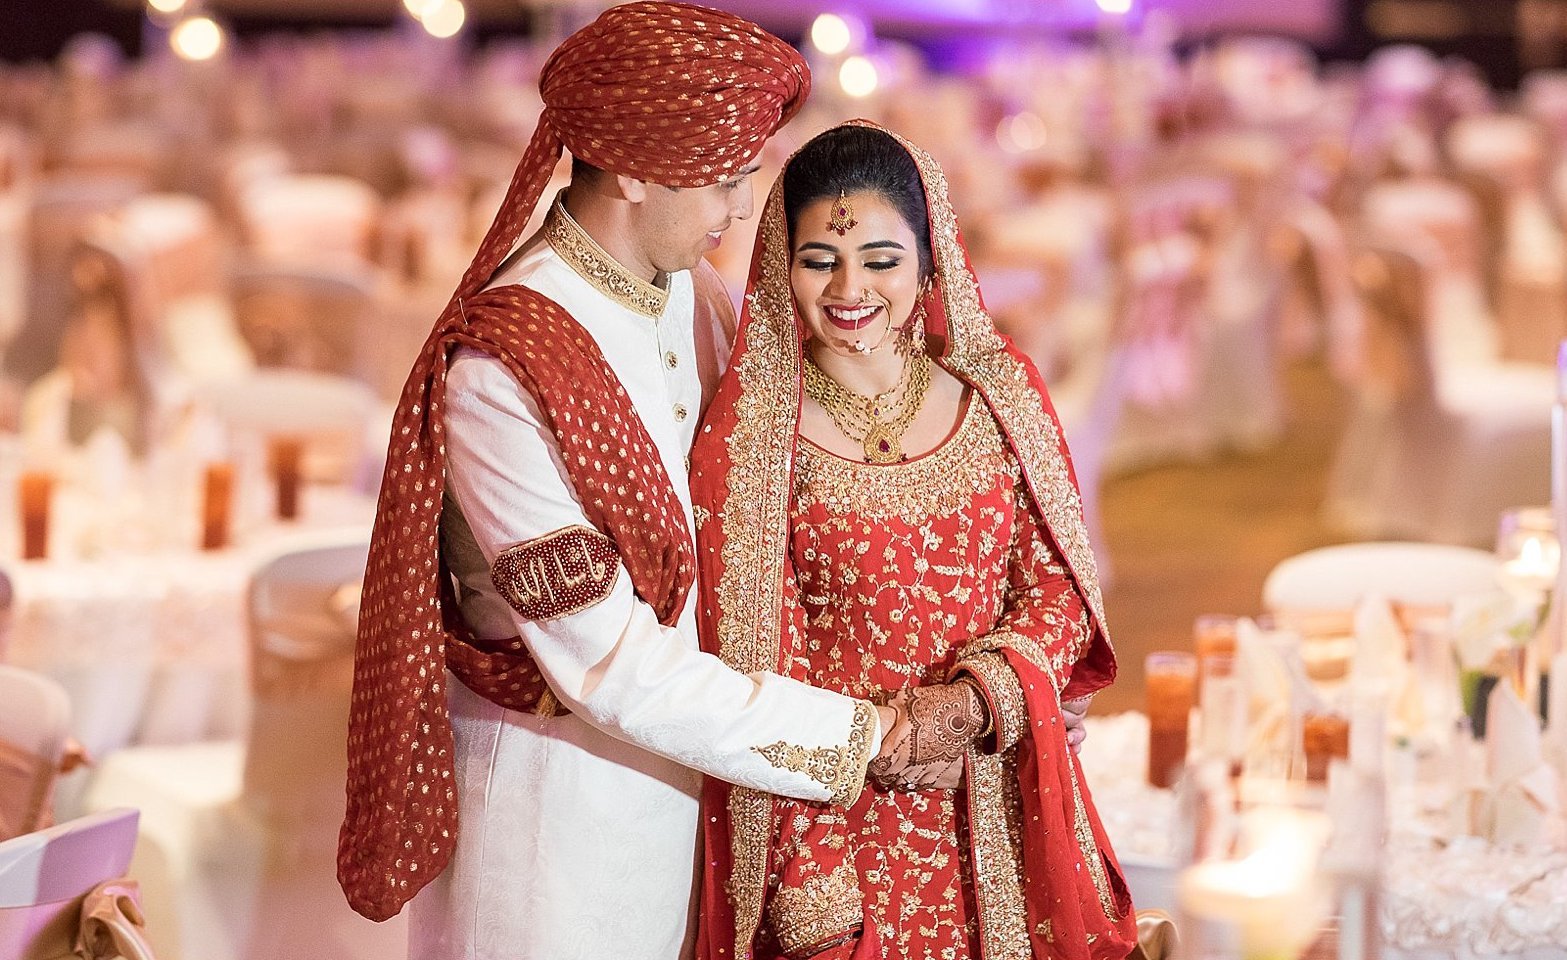 14 Muslim Wedding Culture and Traditions - GetEthnic.com